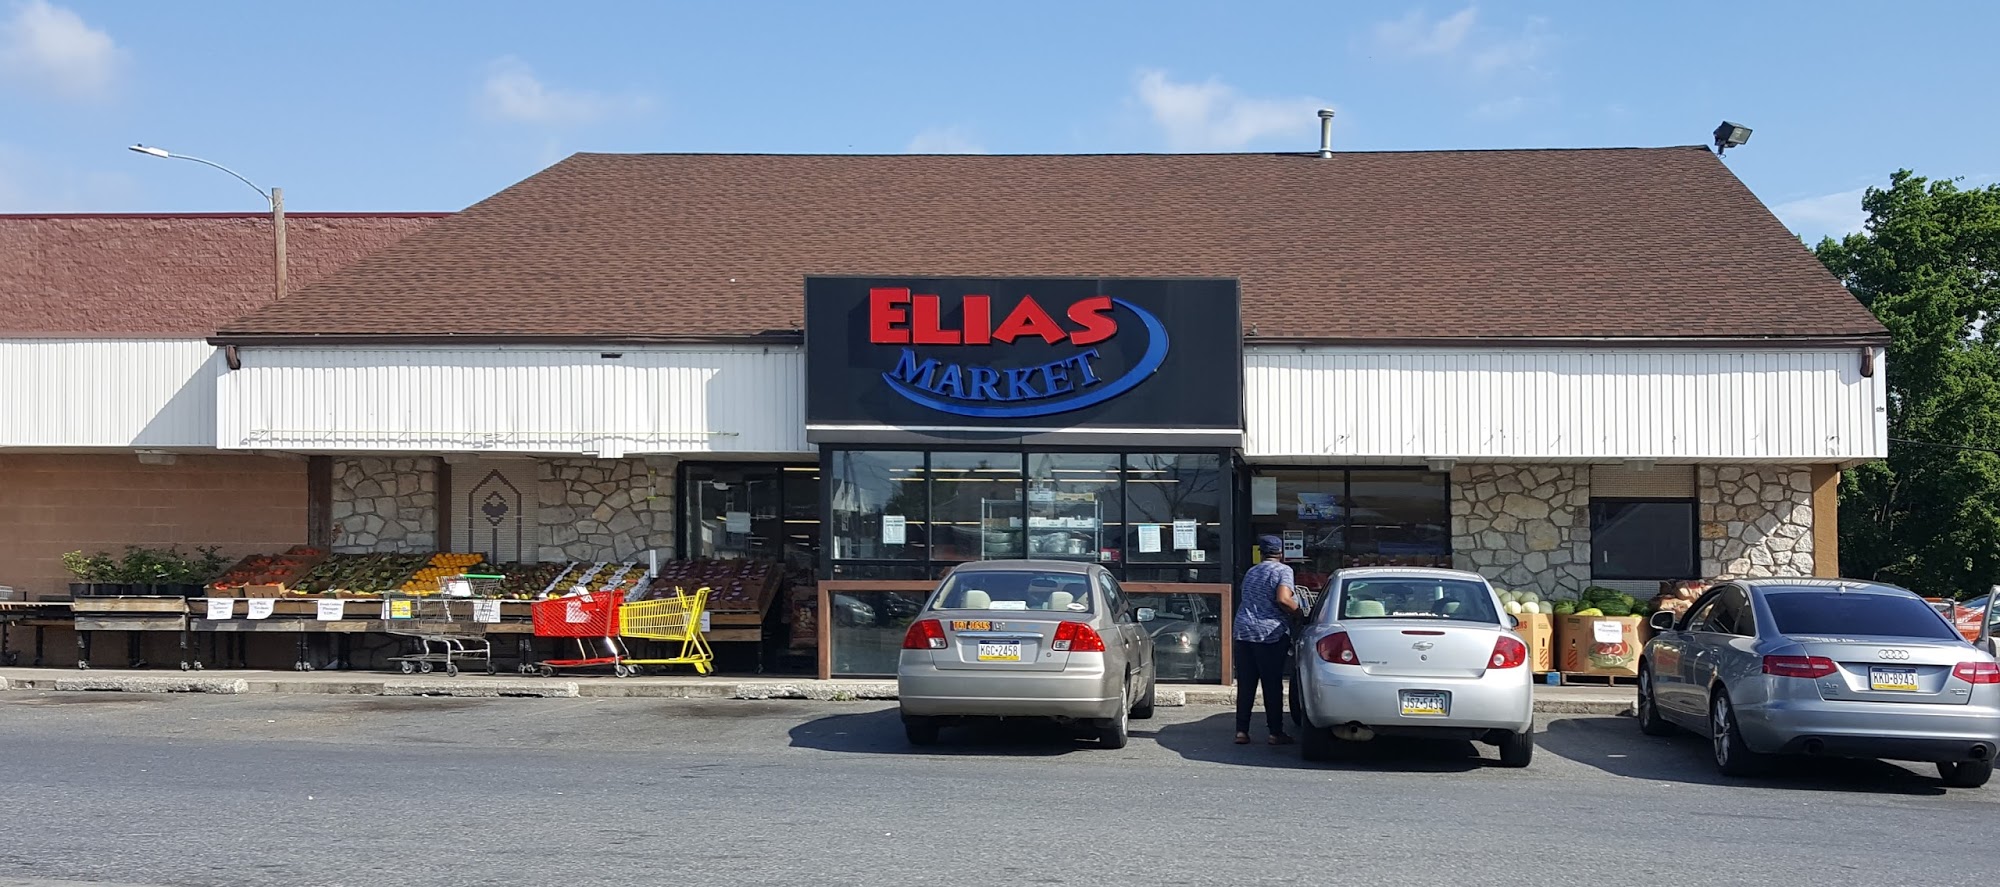 Elias Market